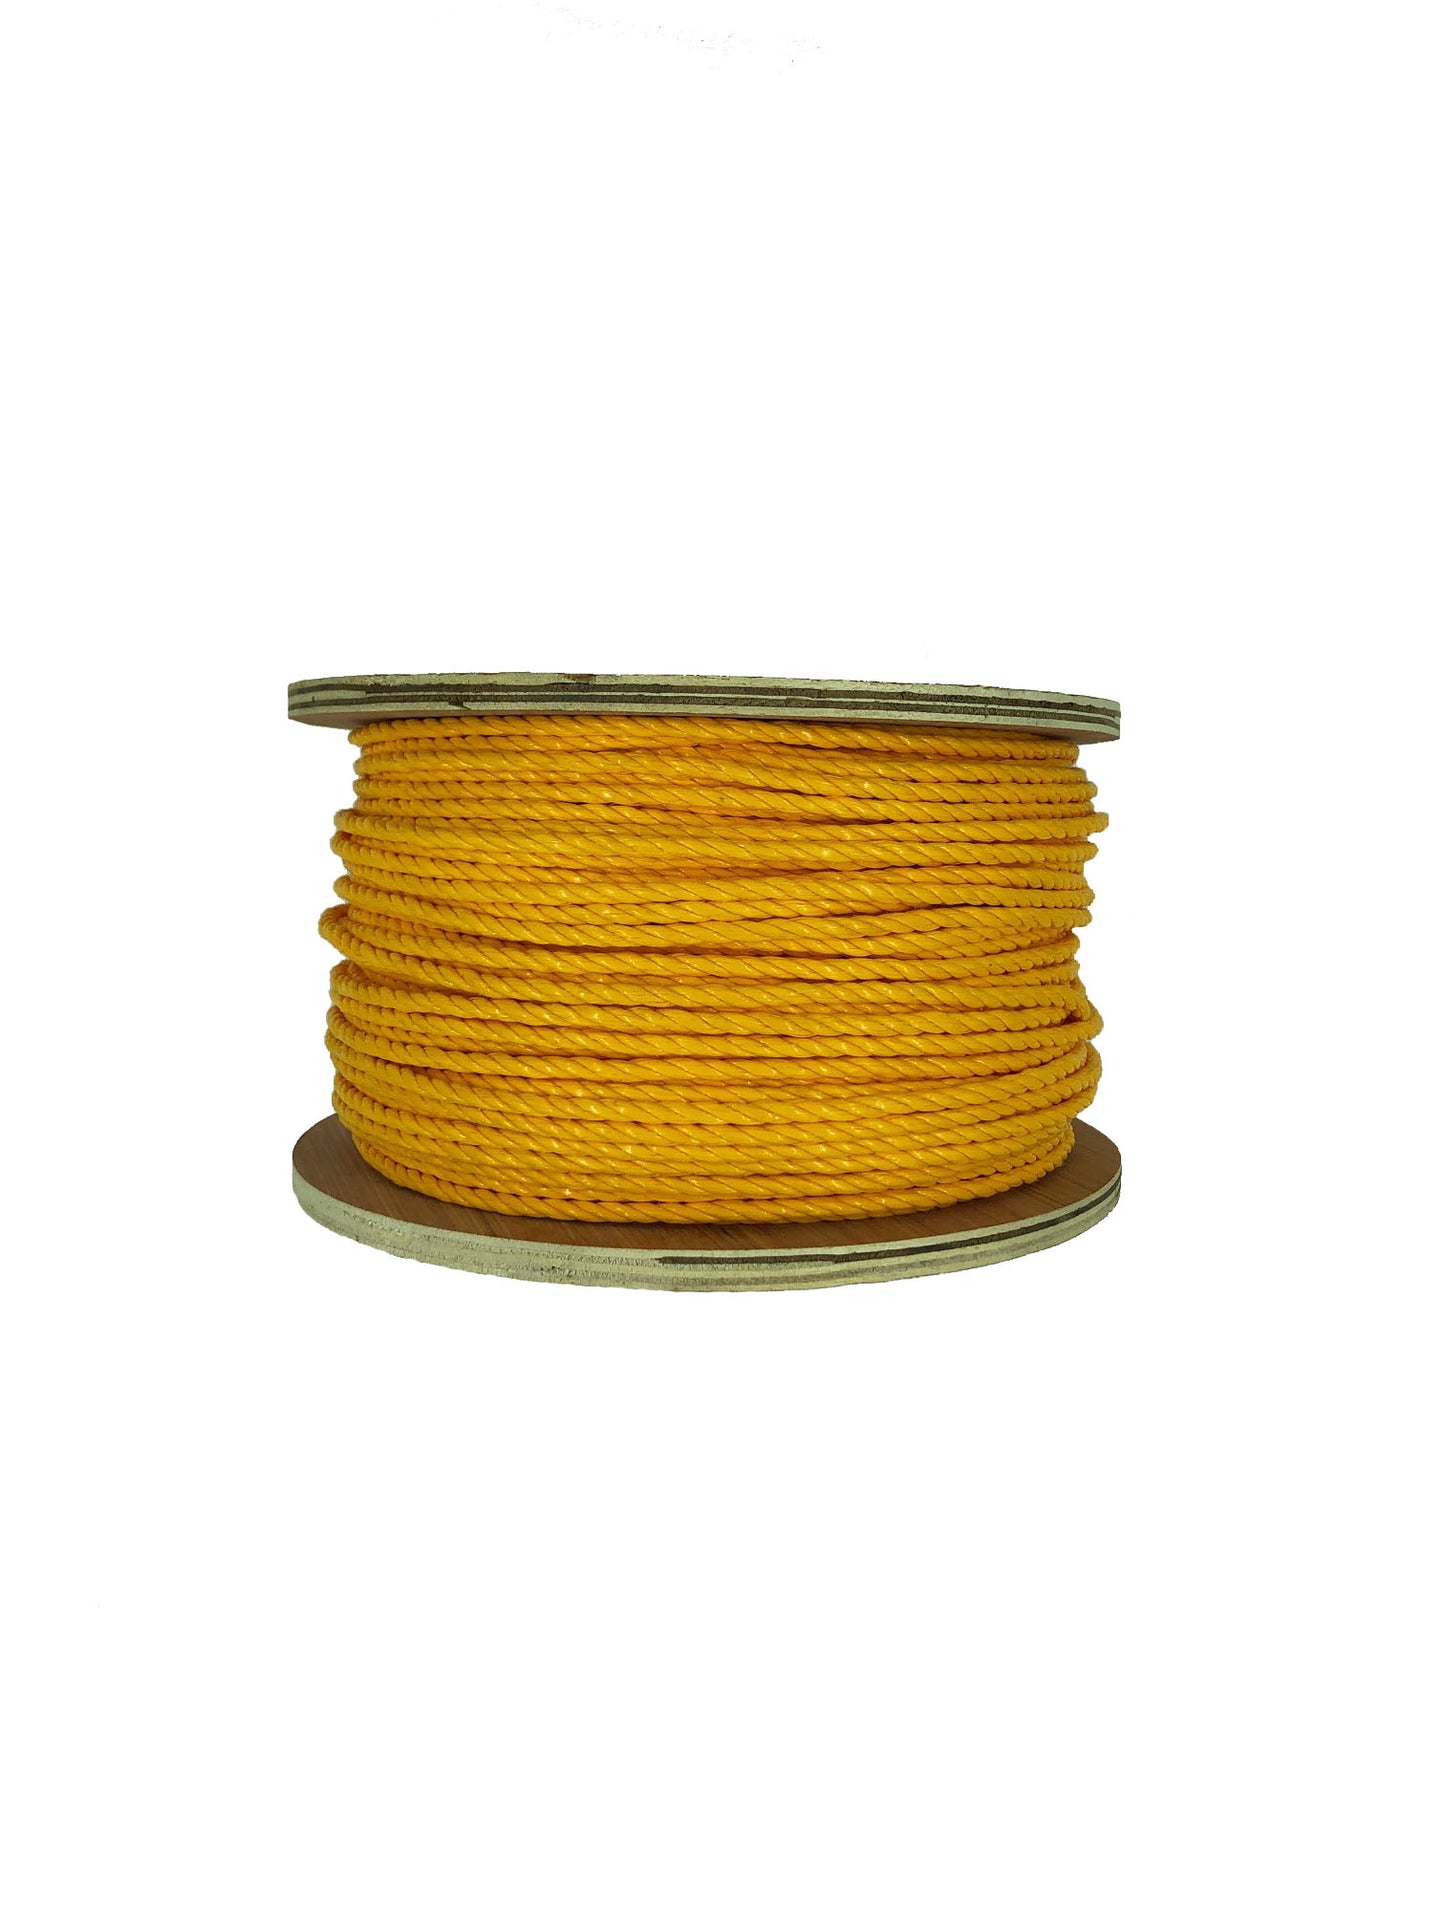 3/8" X 600' Yellow 3-Strand Twisted Polypropylene Rope